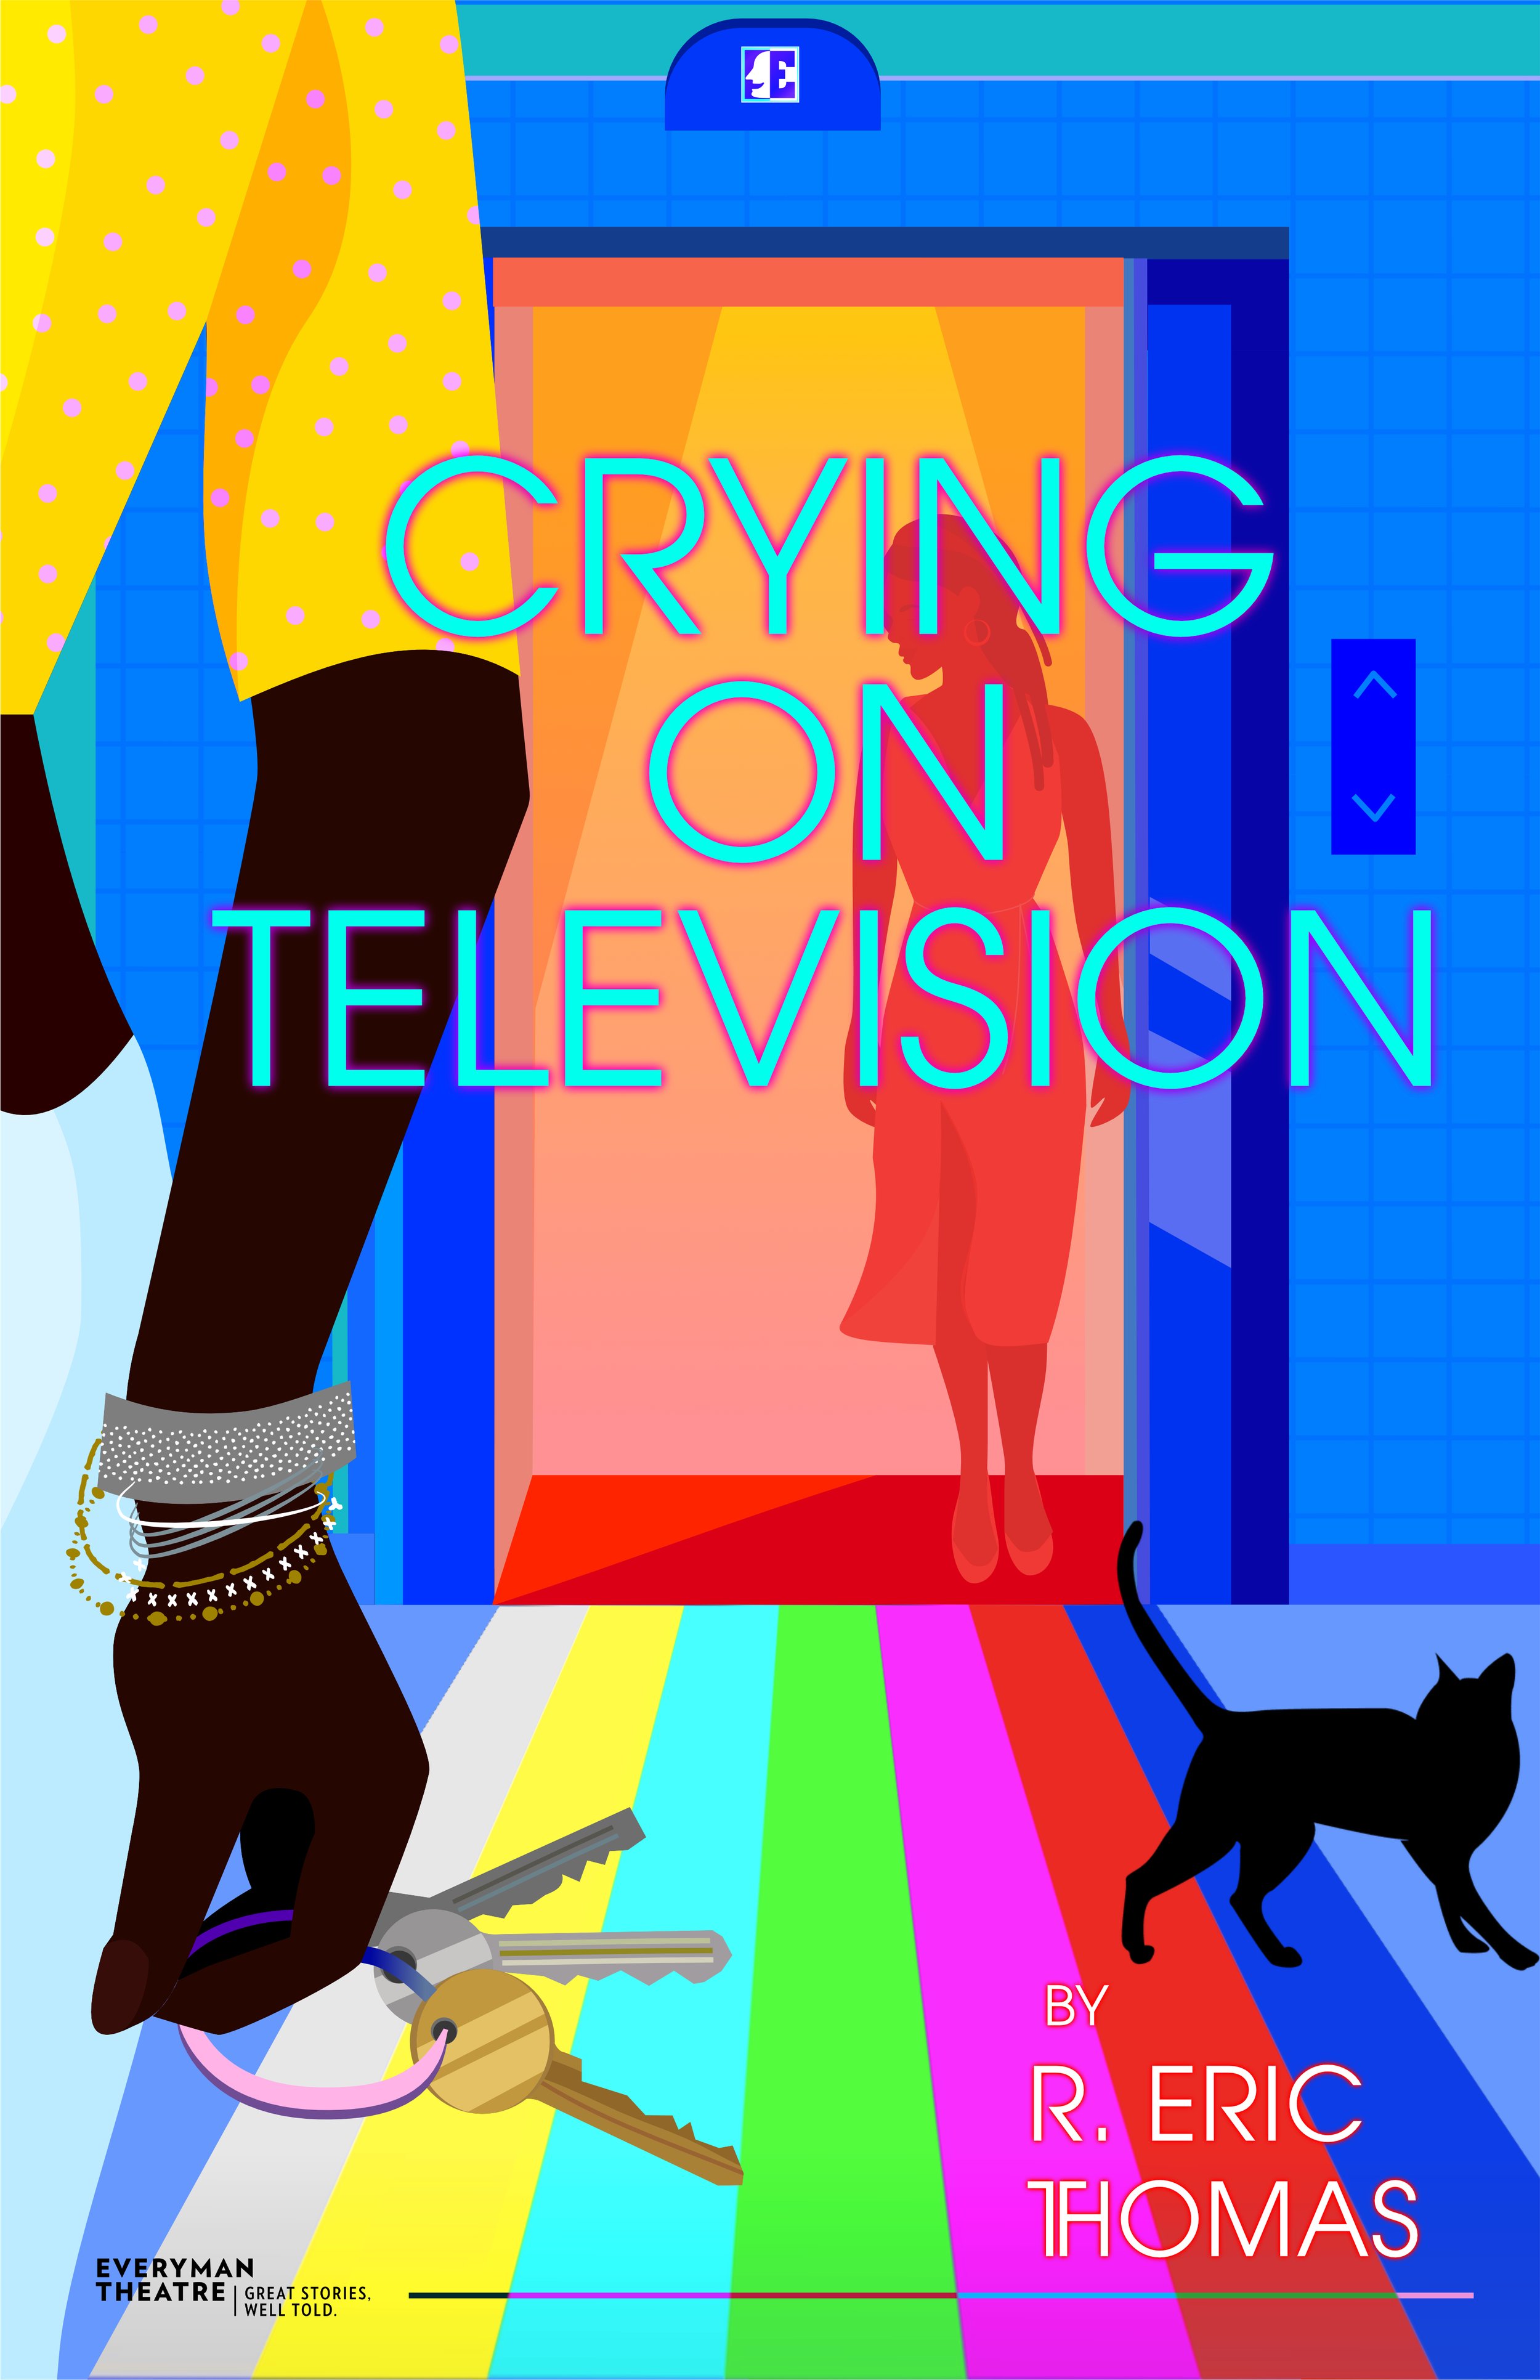 Everyman_CRYING ON TELEVISION-2021.jpg